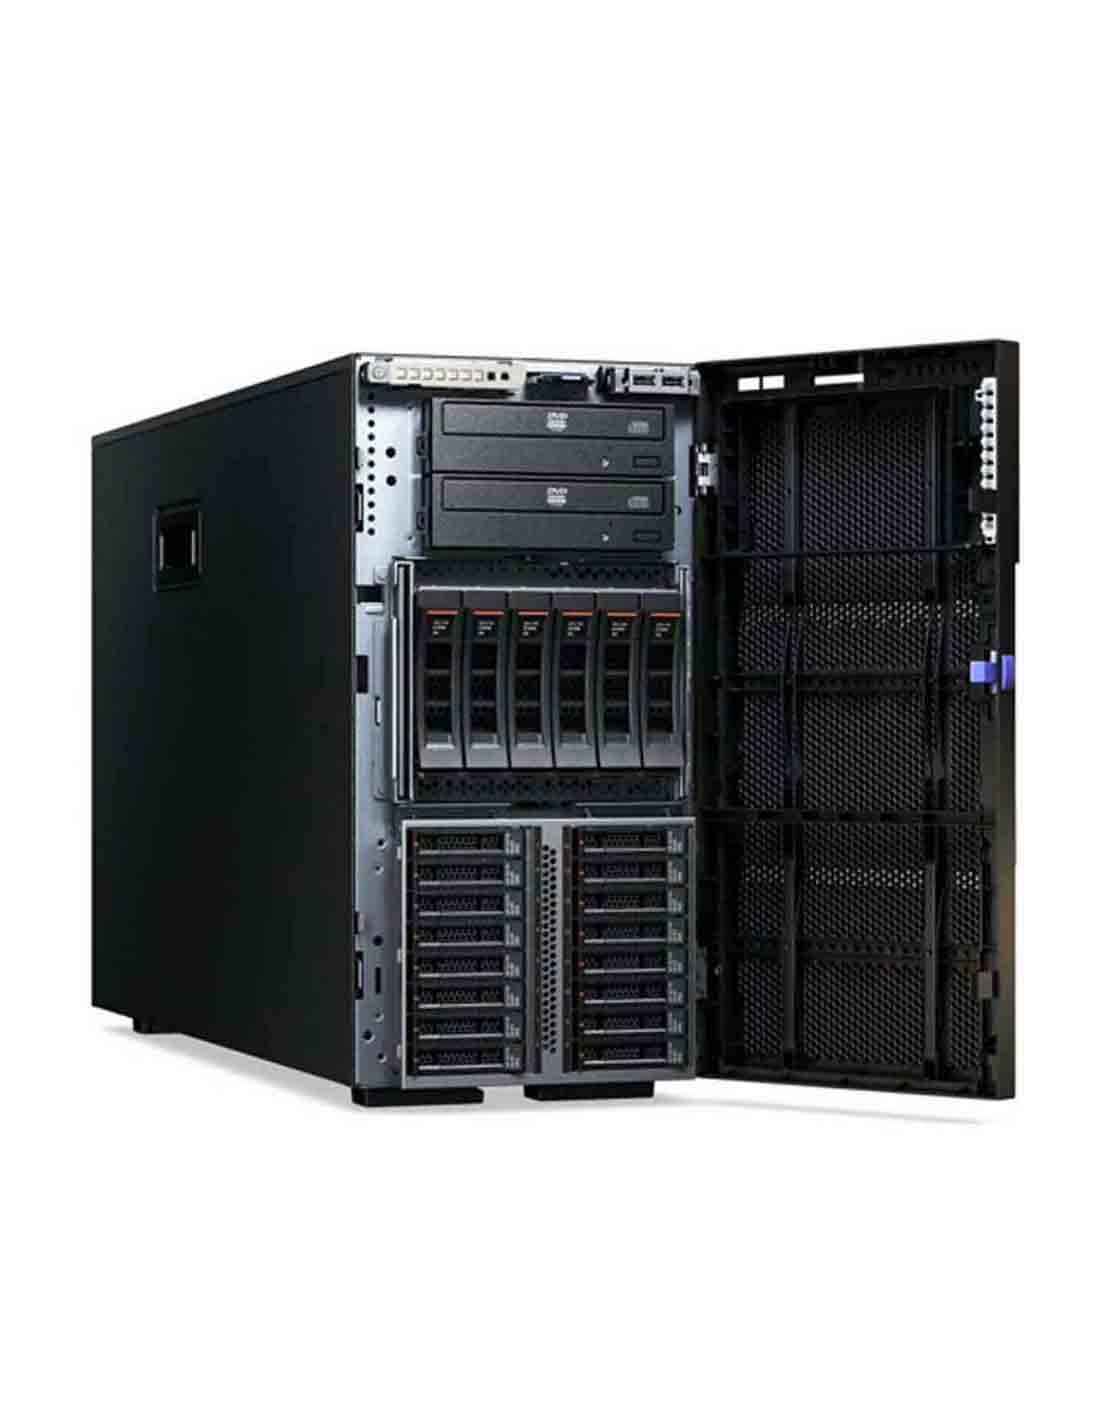 Lenovo x3500 m5 Tower Server 5464B2G Dubai Online Store